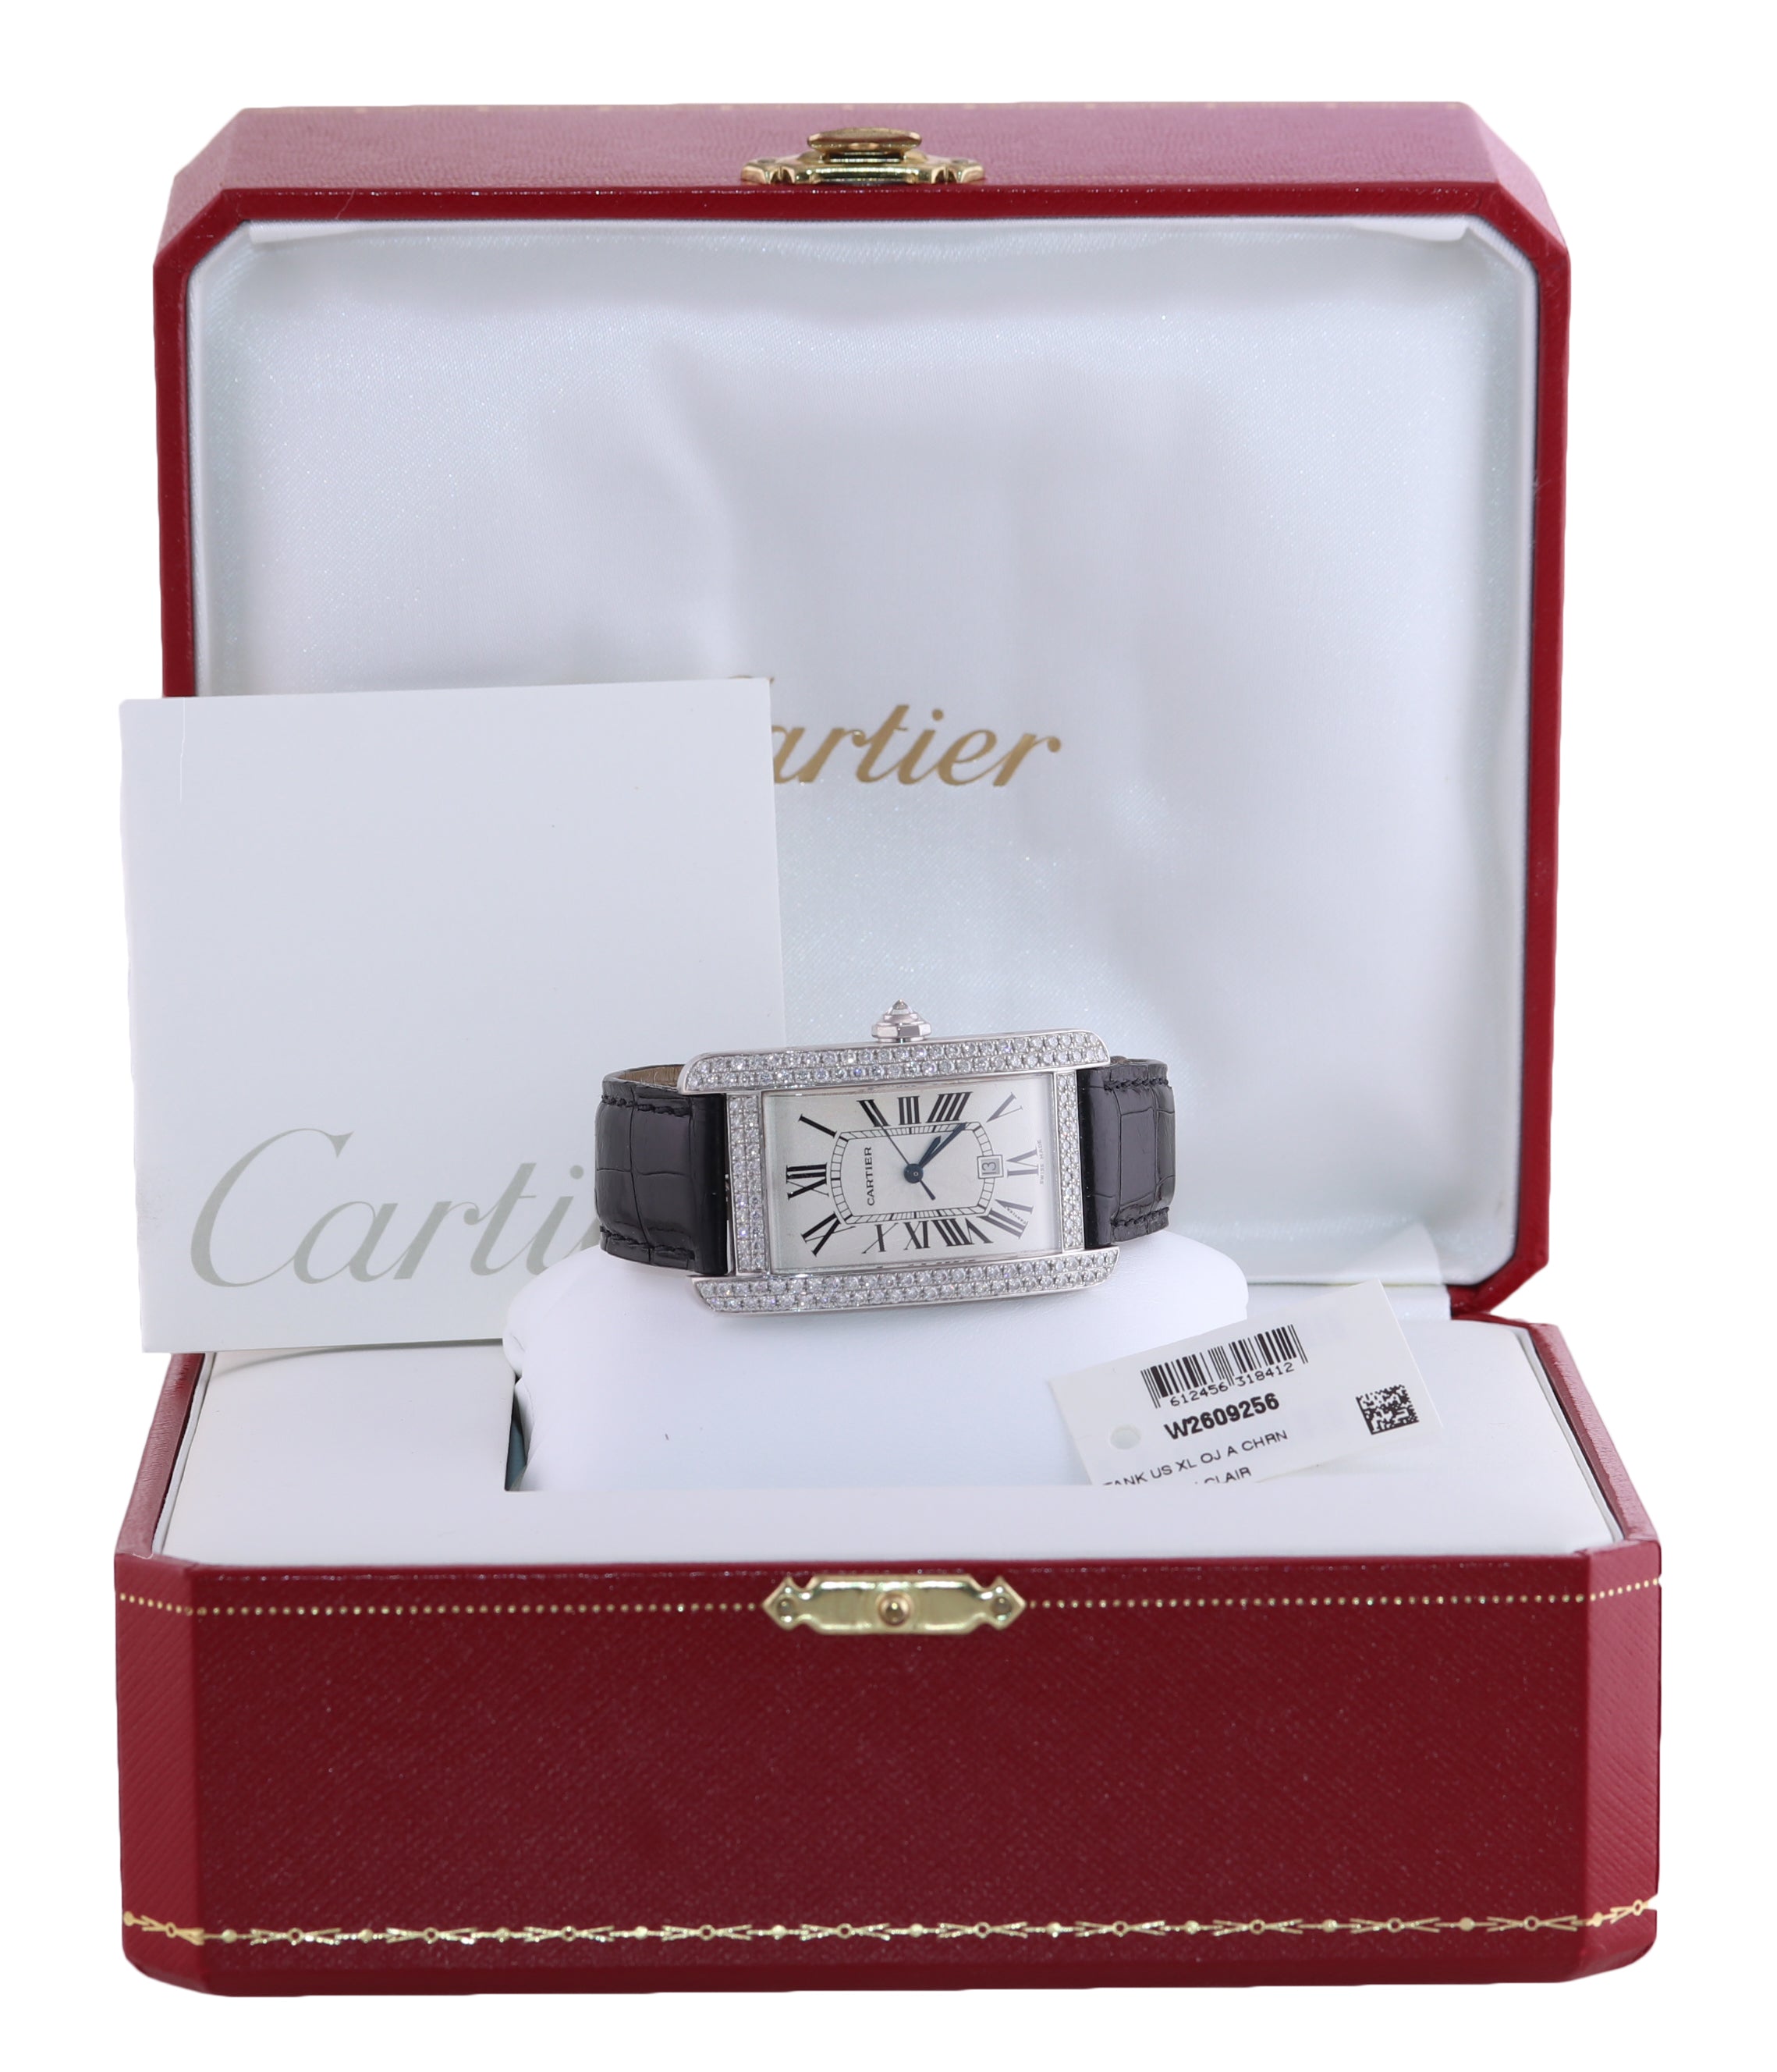 Ladies Cartier Tank Americaine XL 18k White Gold Diamond Leather Watch 2521 Box